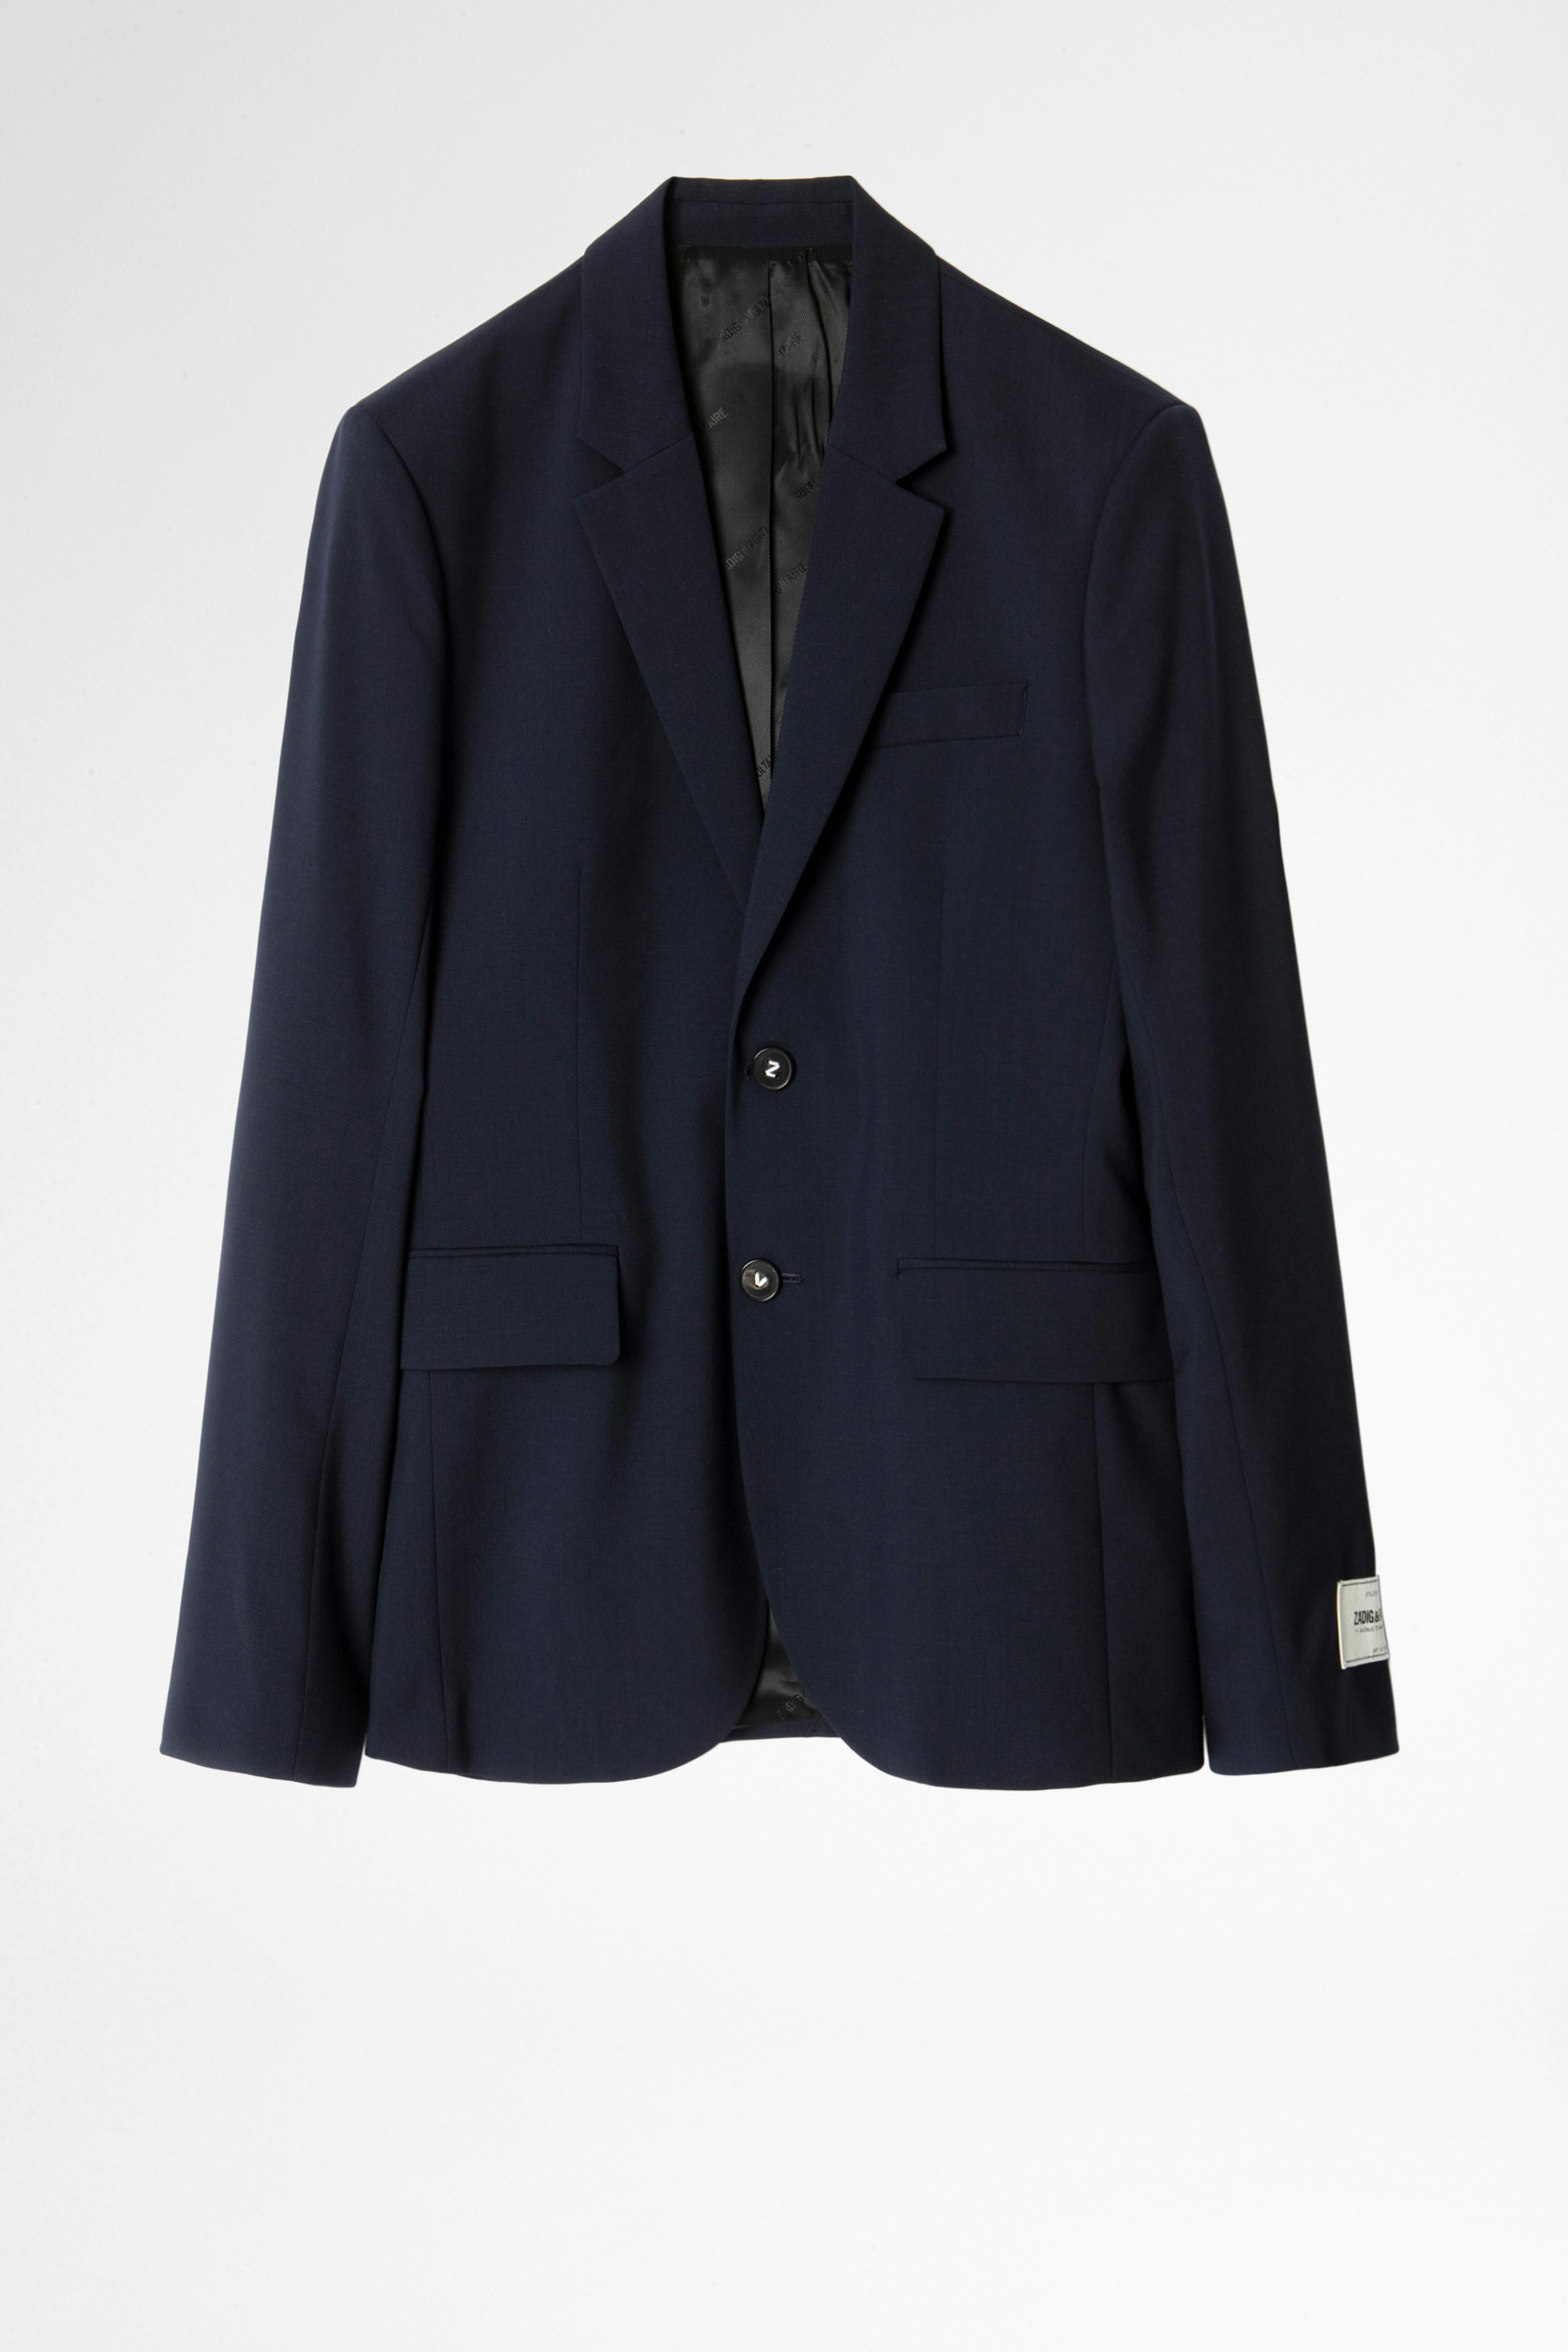 Version Wool jacket Men’s blue jacket